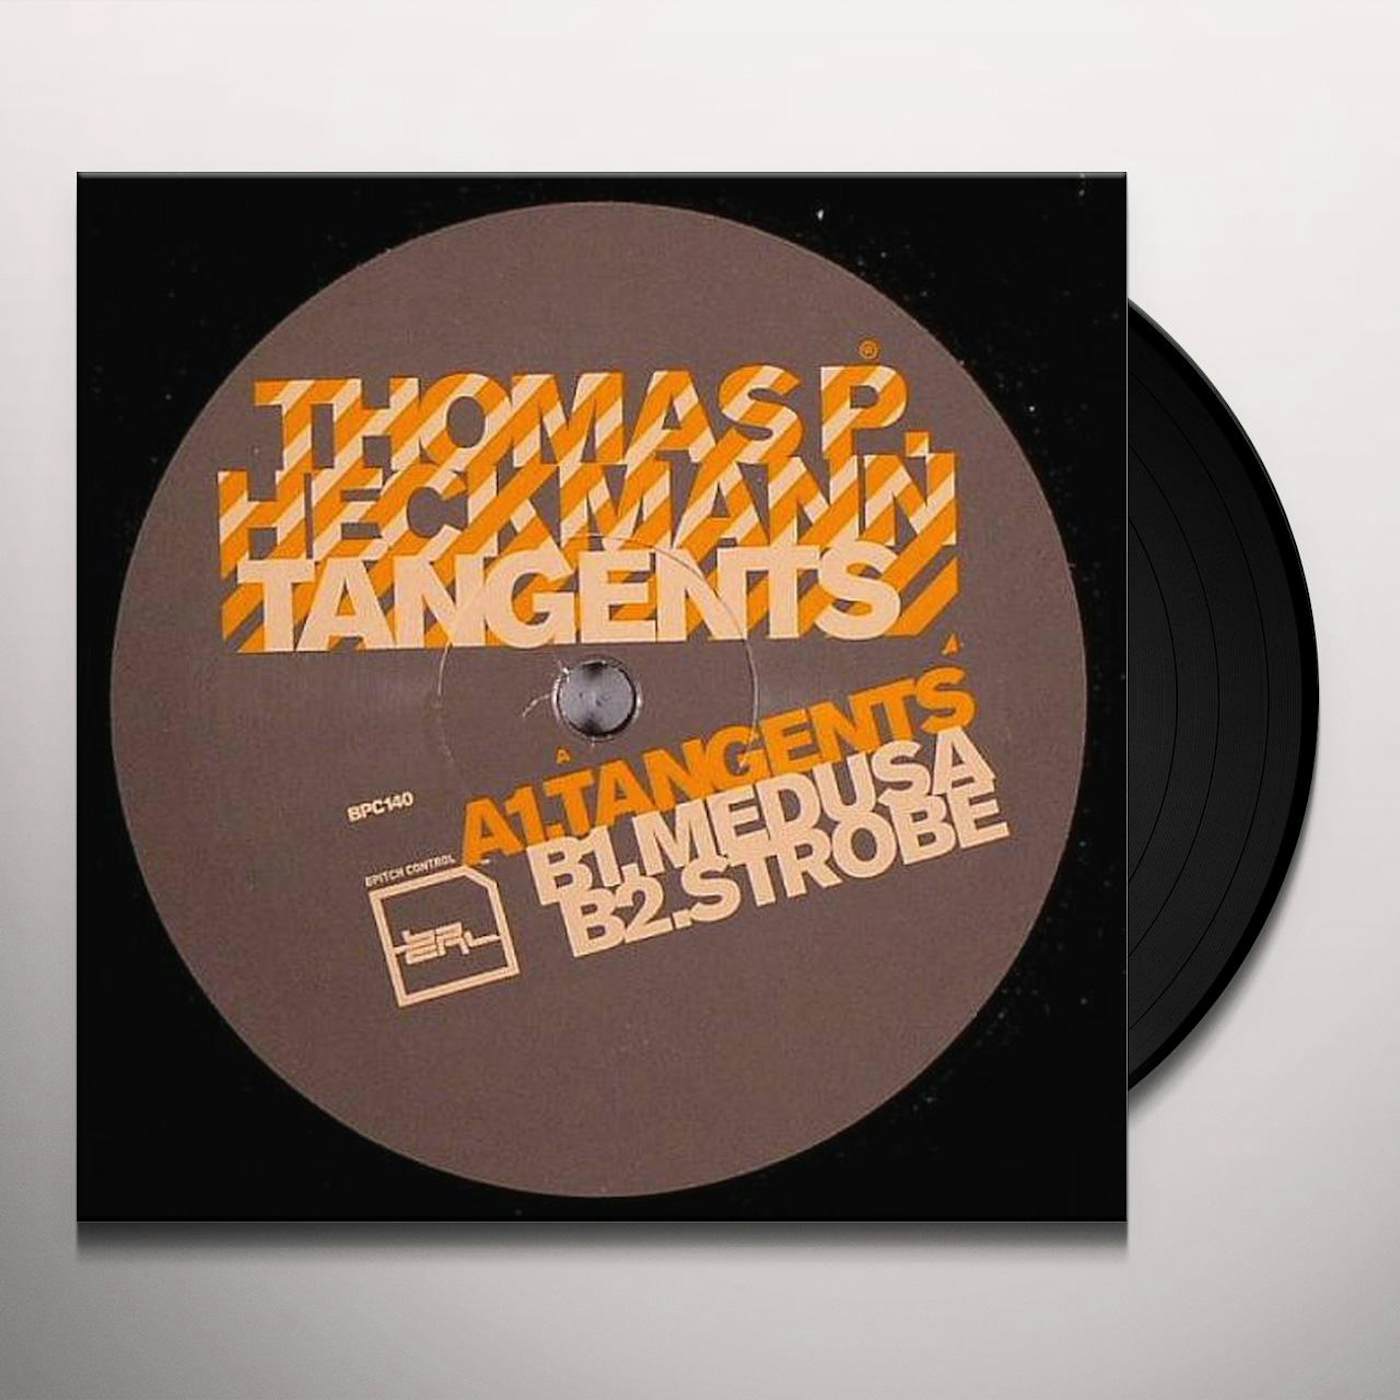 Thomas P. Heckmann Tangents Vinyl Record